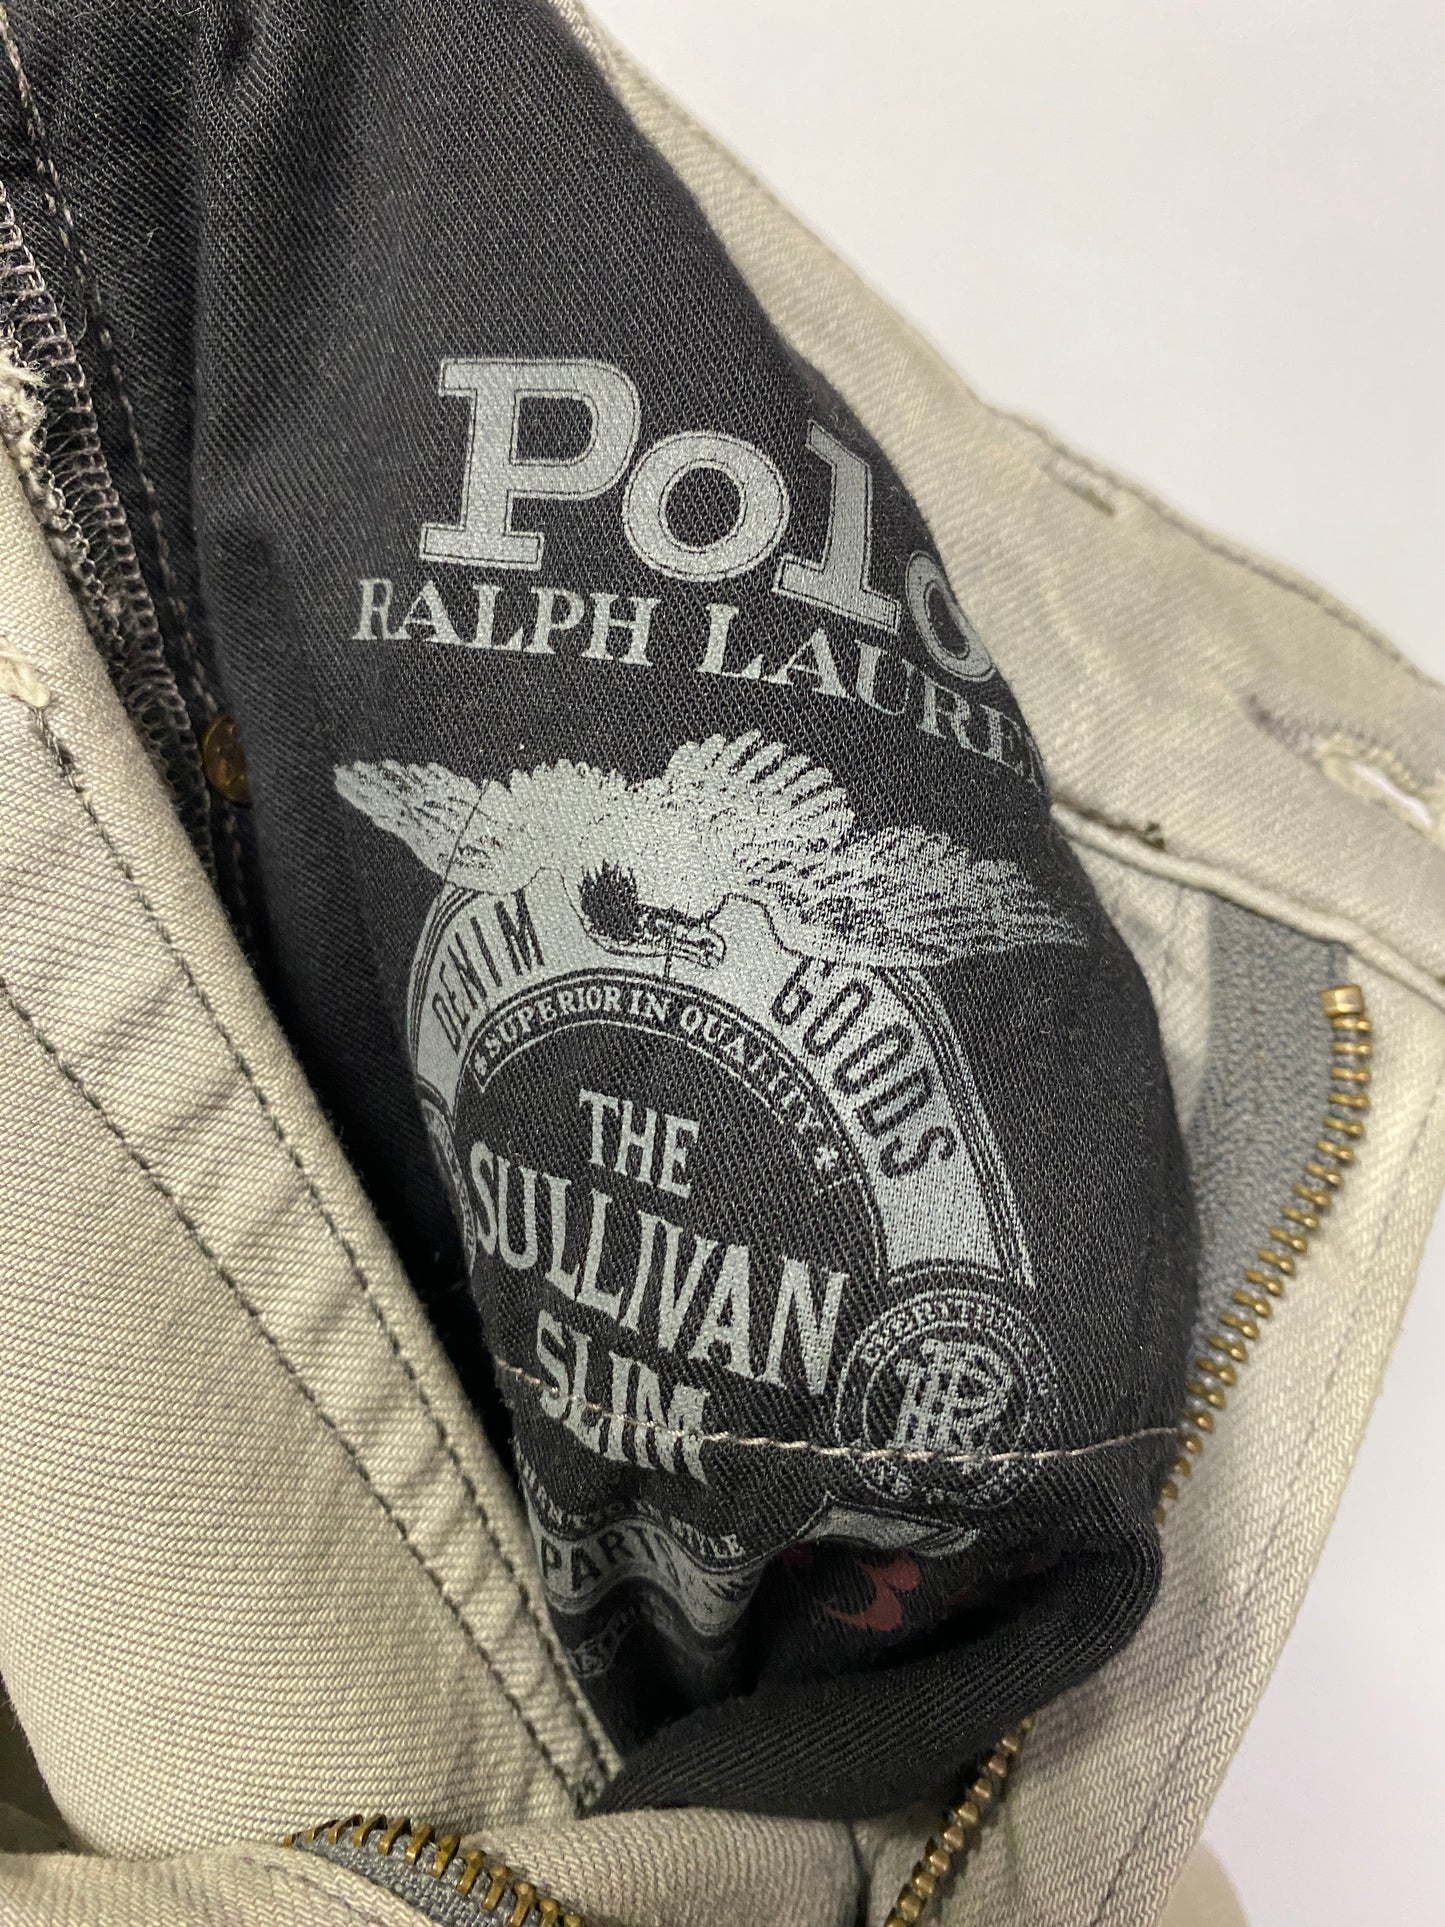 Polo Grey Stone Washed Sullivan Slim Jeans 29